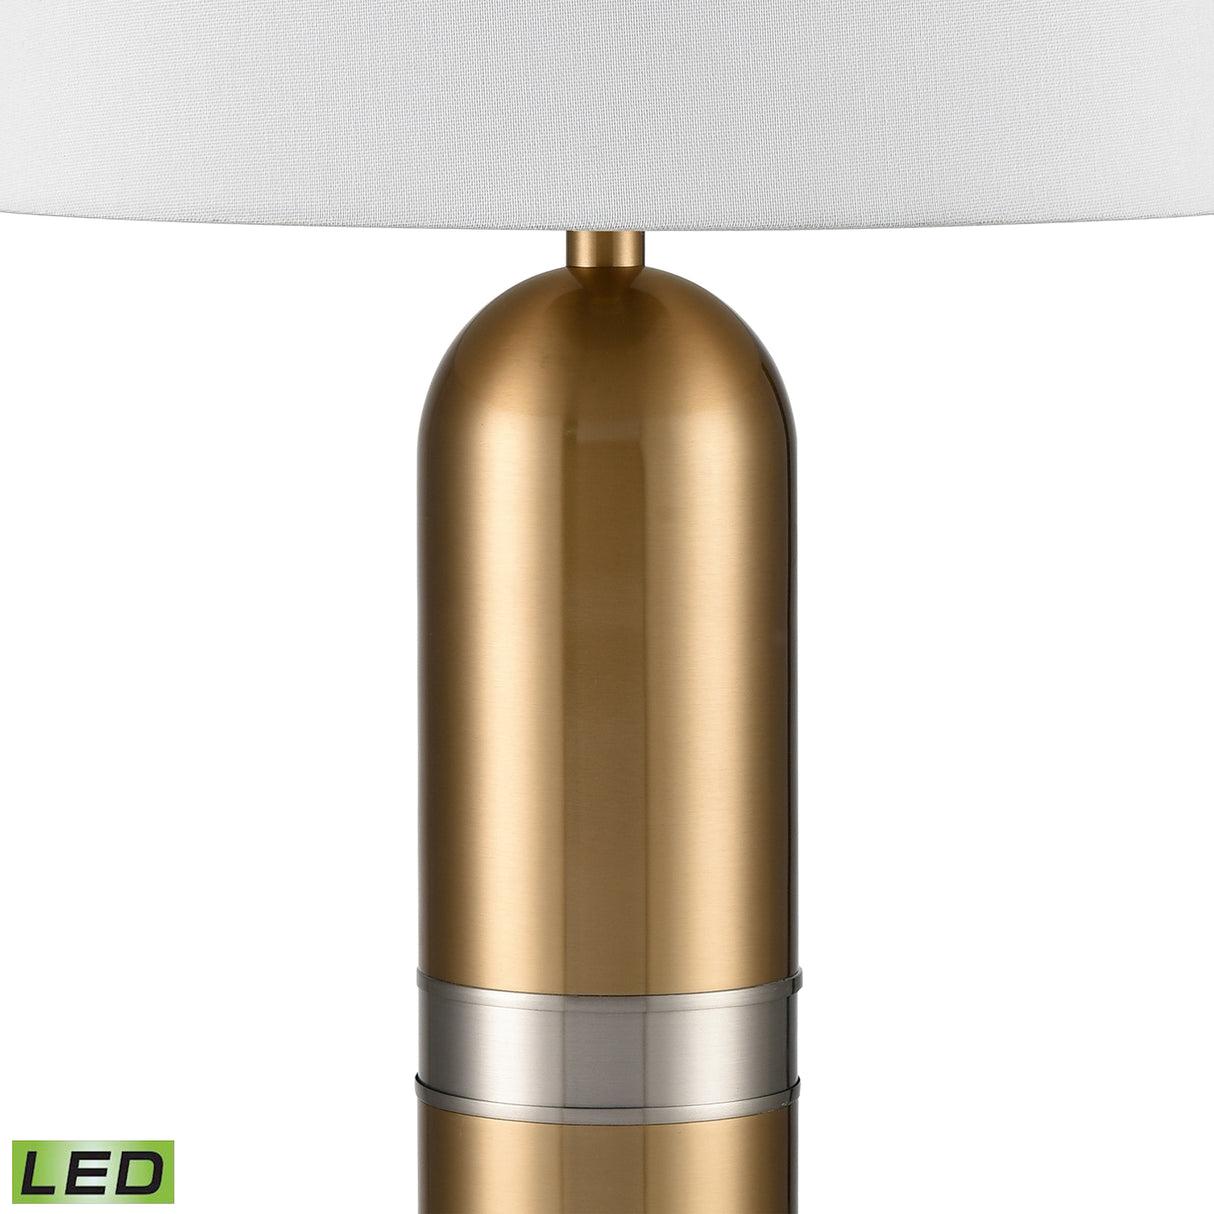 Elk H0019-9575-LED Pill 34'' High 1-Light Table Lamp - Aged Brass - Includes LED Bulb